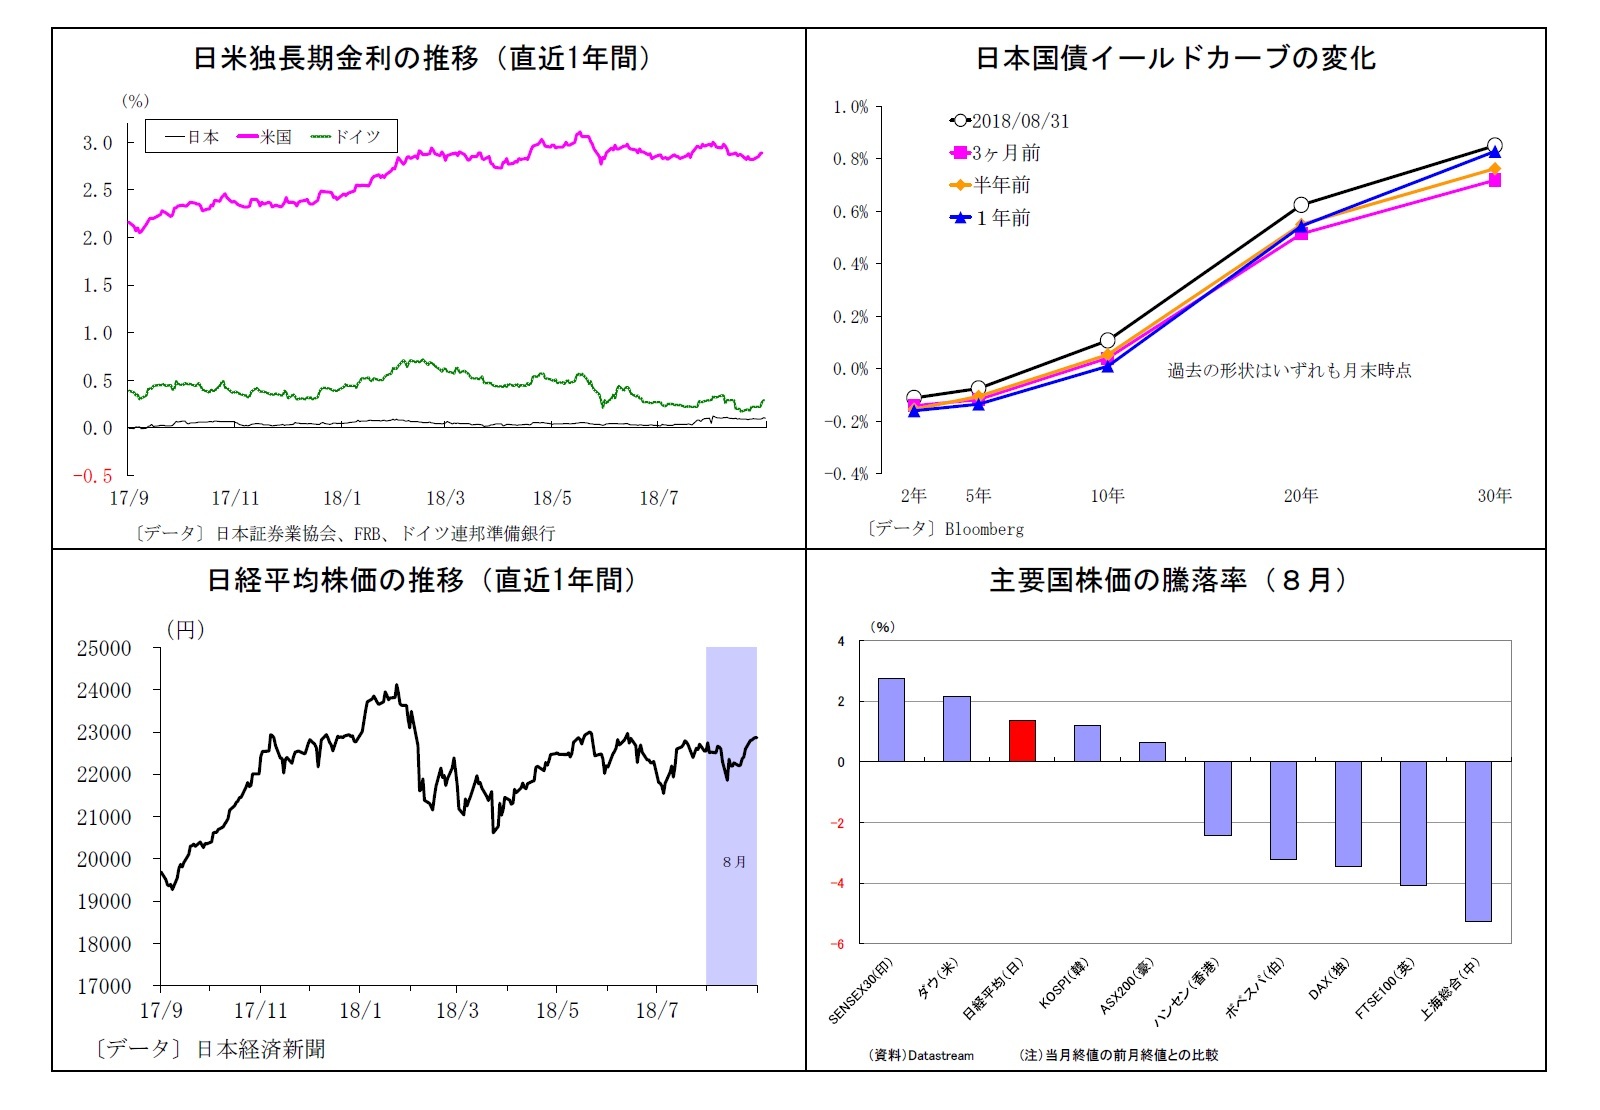 日米独長期金利の推移（直近1年間）/日本国債イールドカーブの変化/日経平均株価の推移（直近1年間）/主要国株価の騰落率（８月）